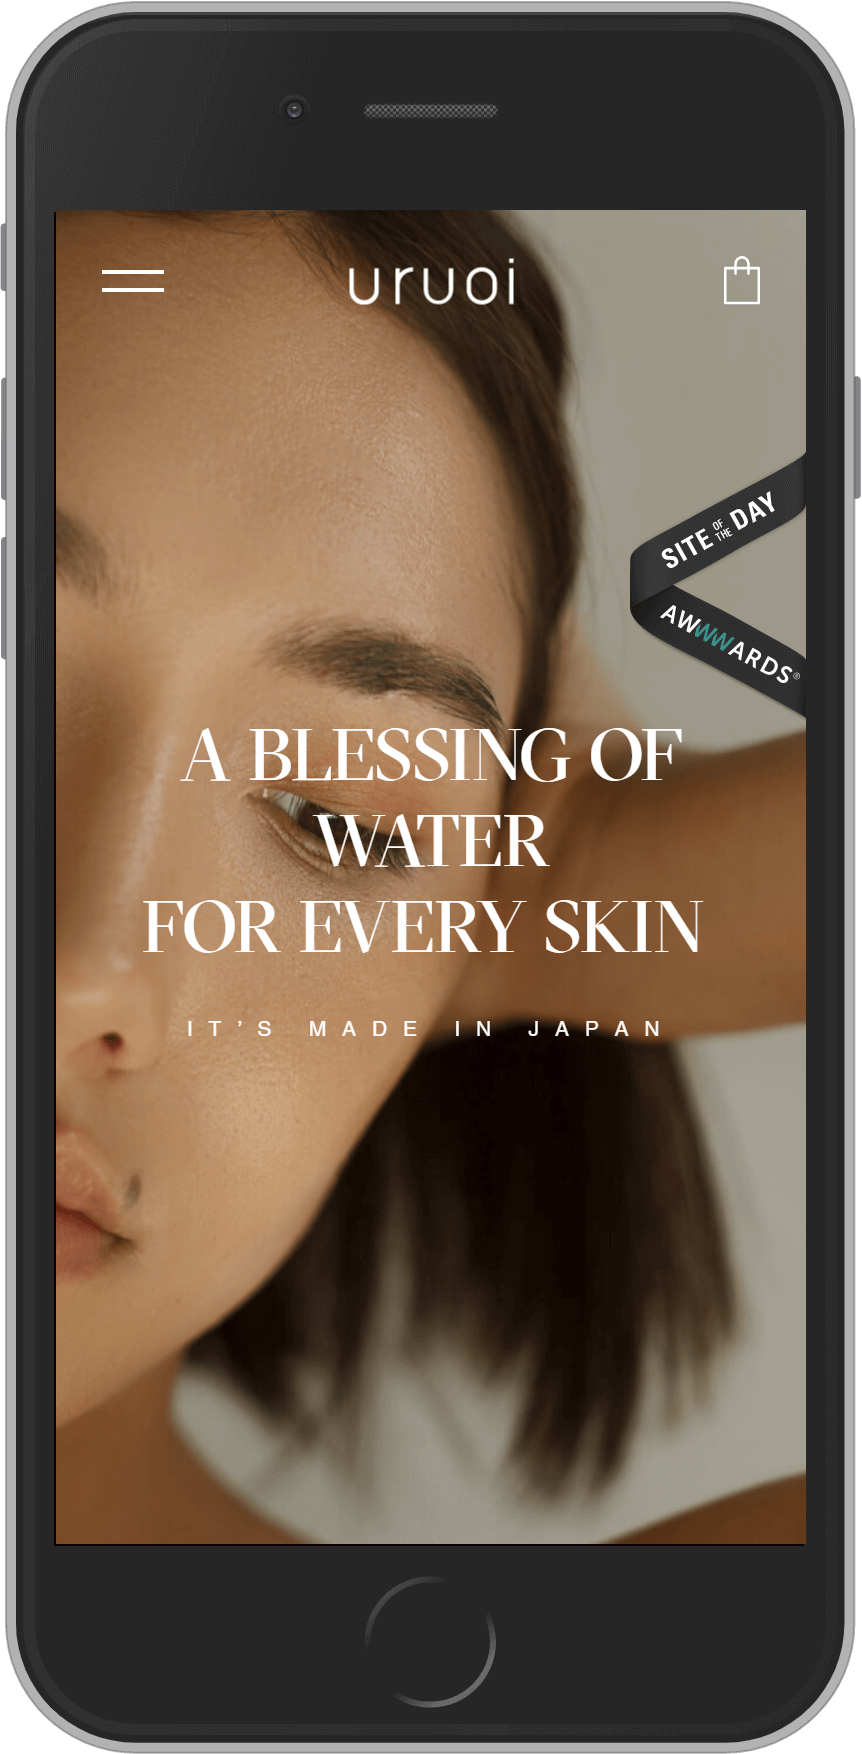 Uruoi Skincare on mobile